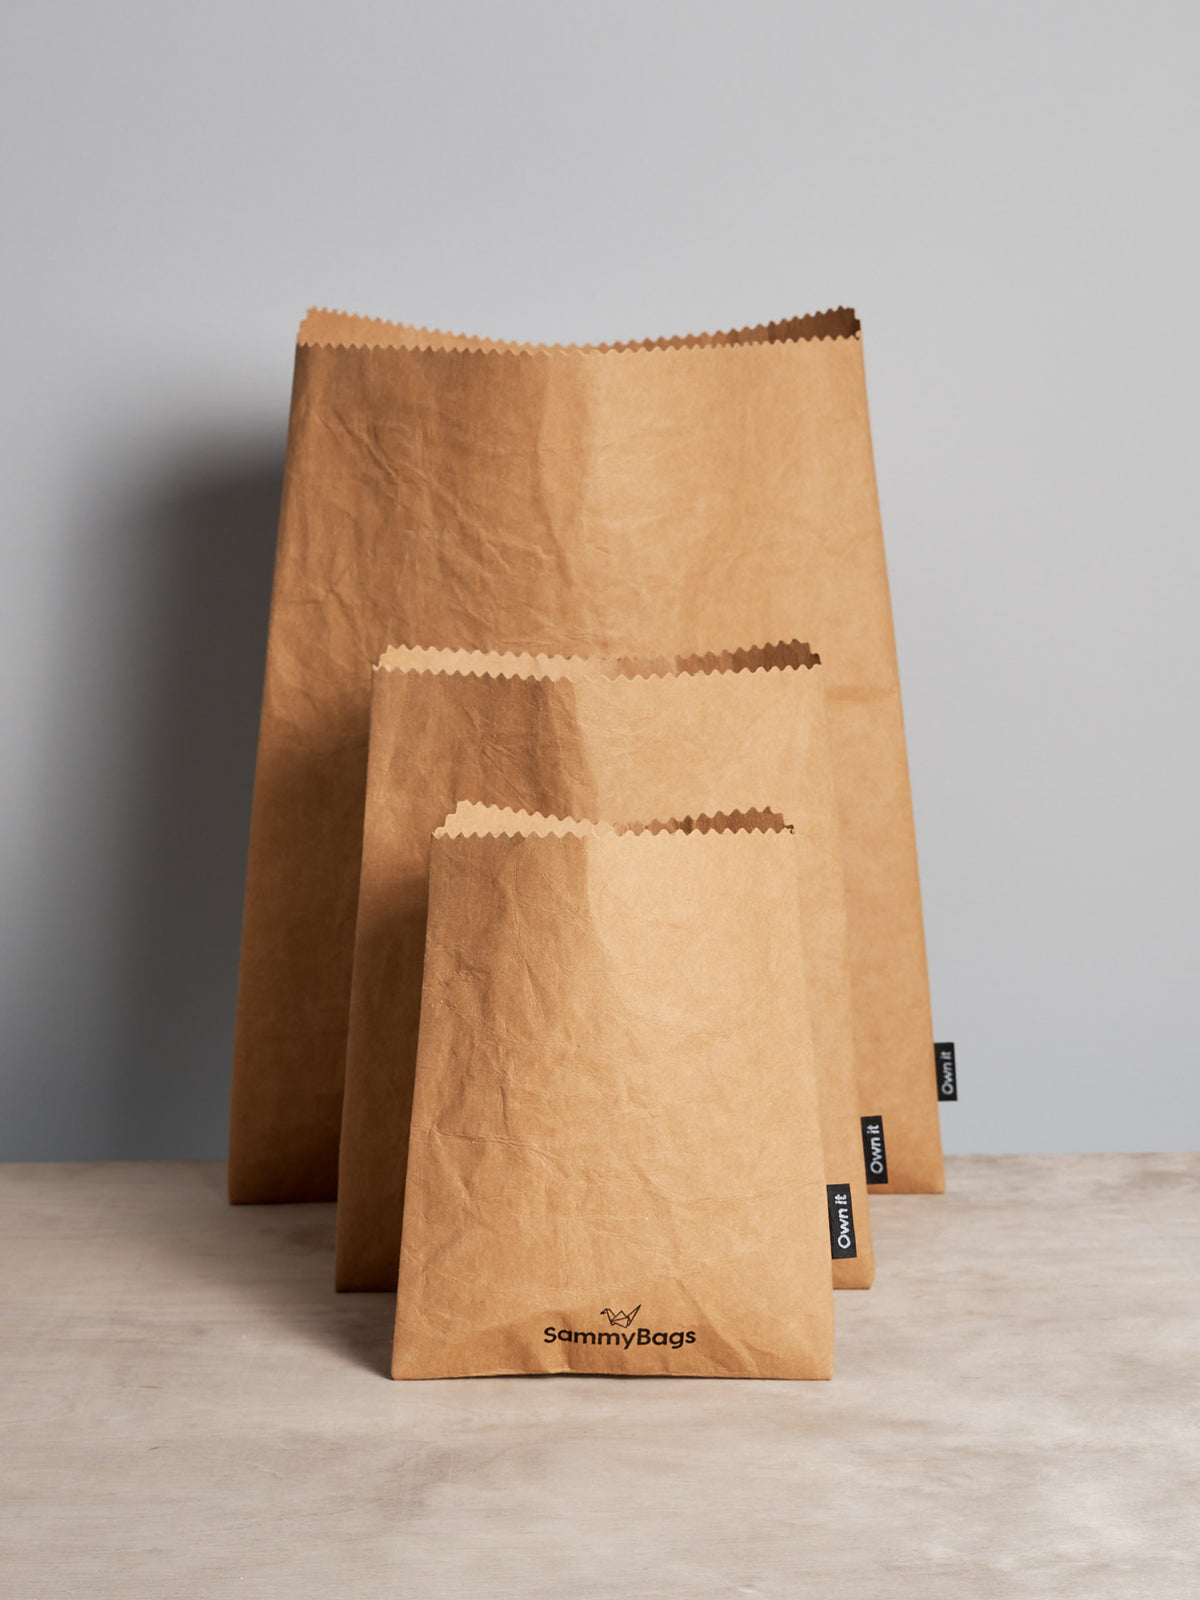 Three Sammy Bags Reusable Flat Bag – Medium on a table.